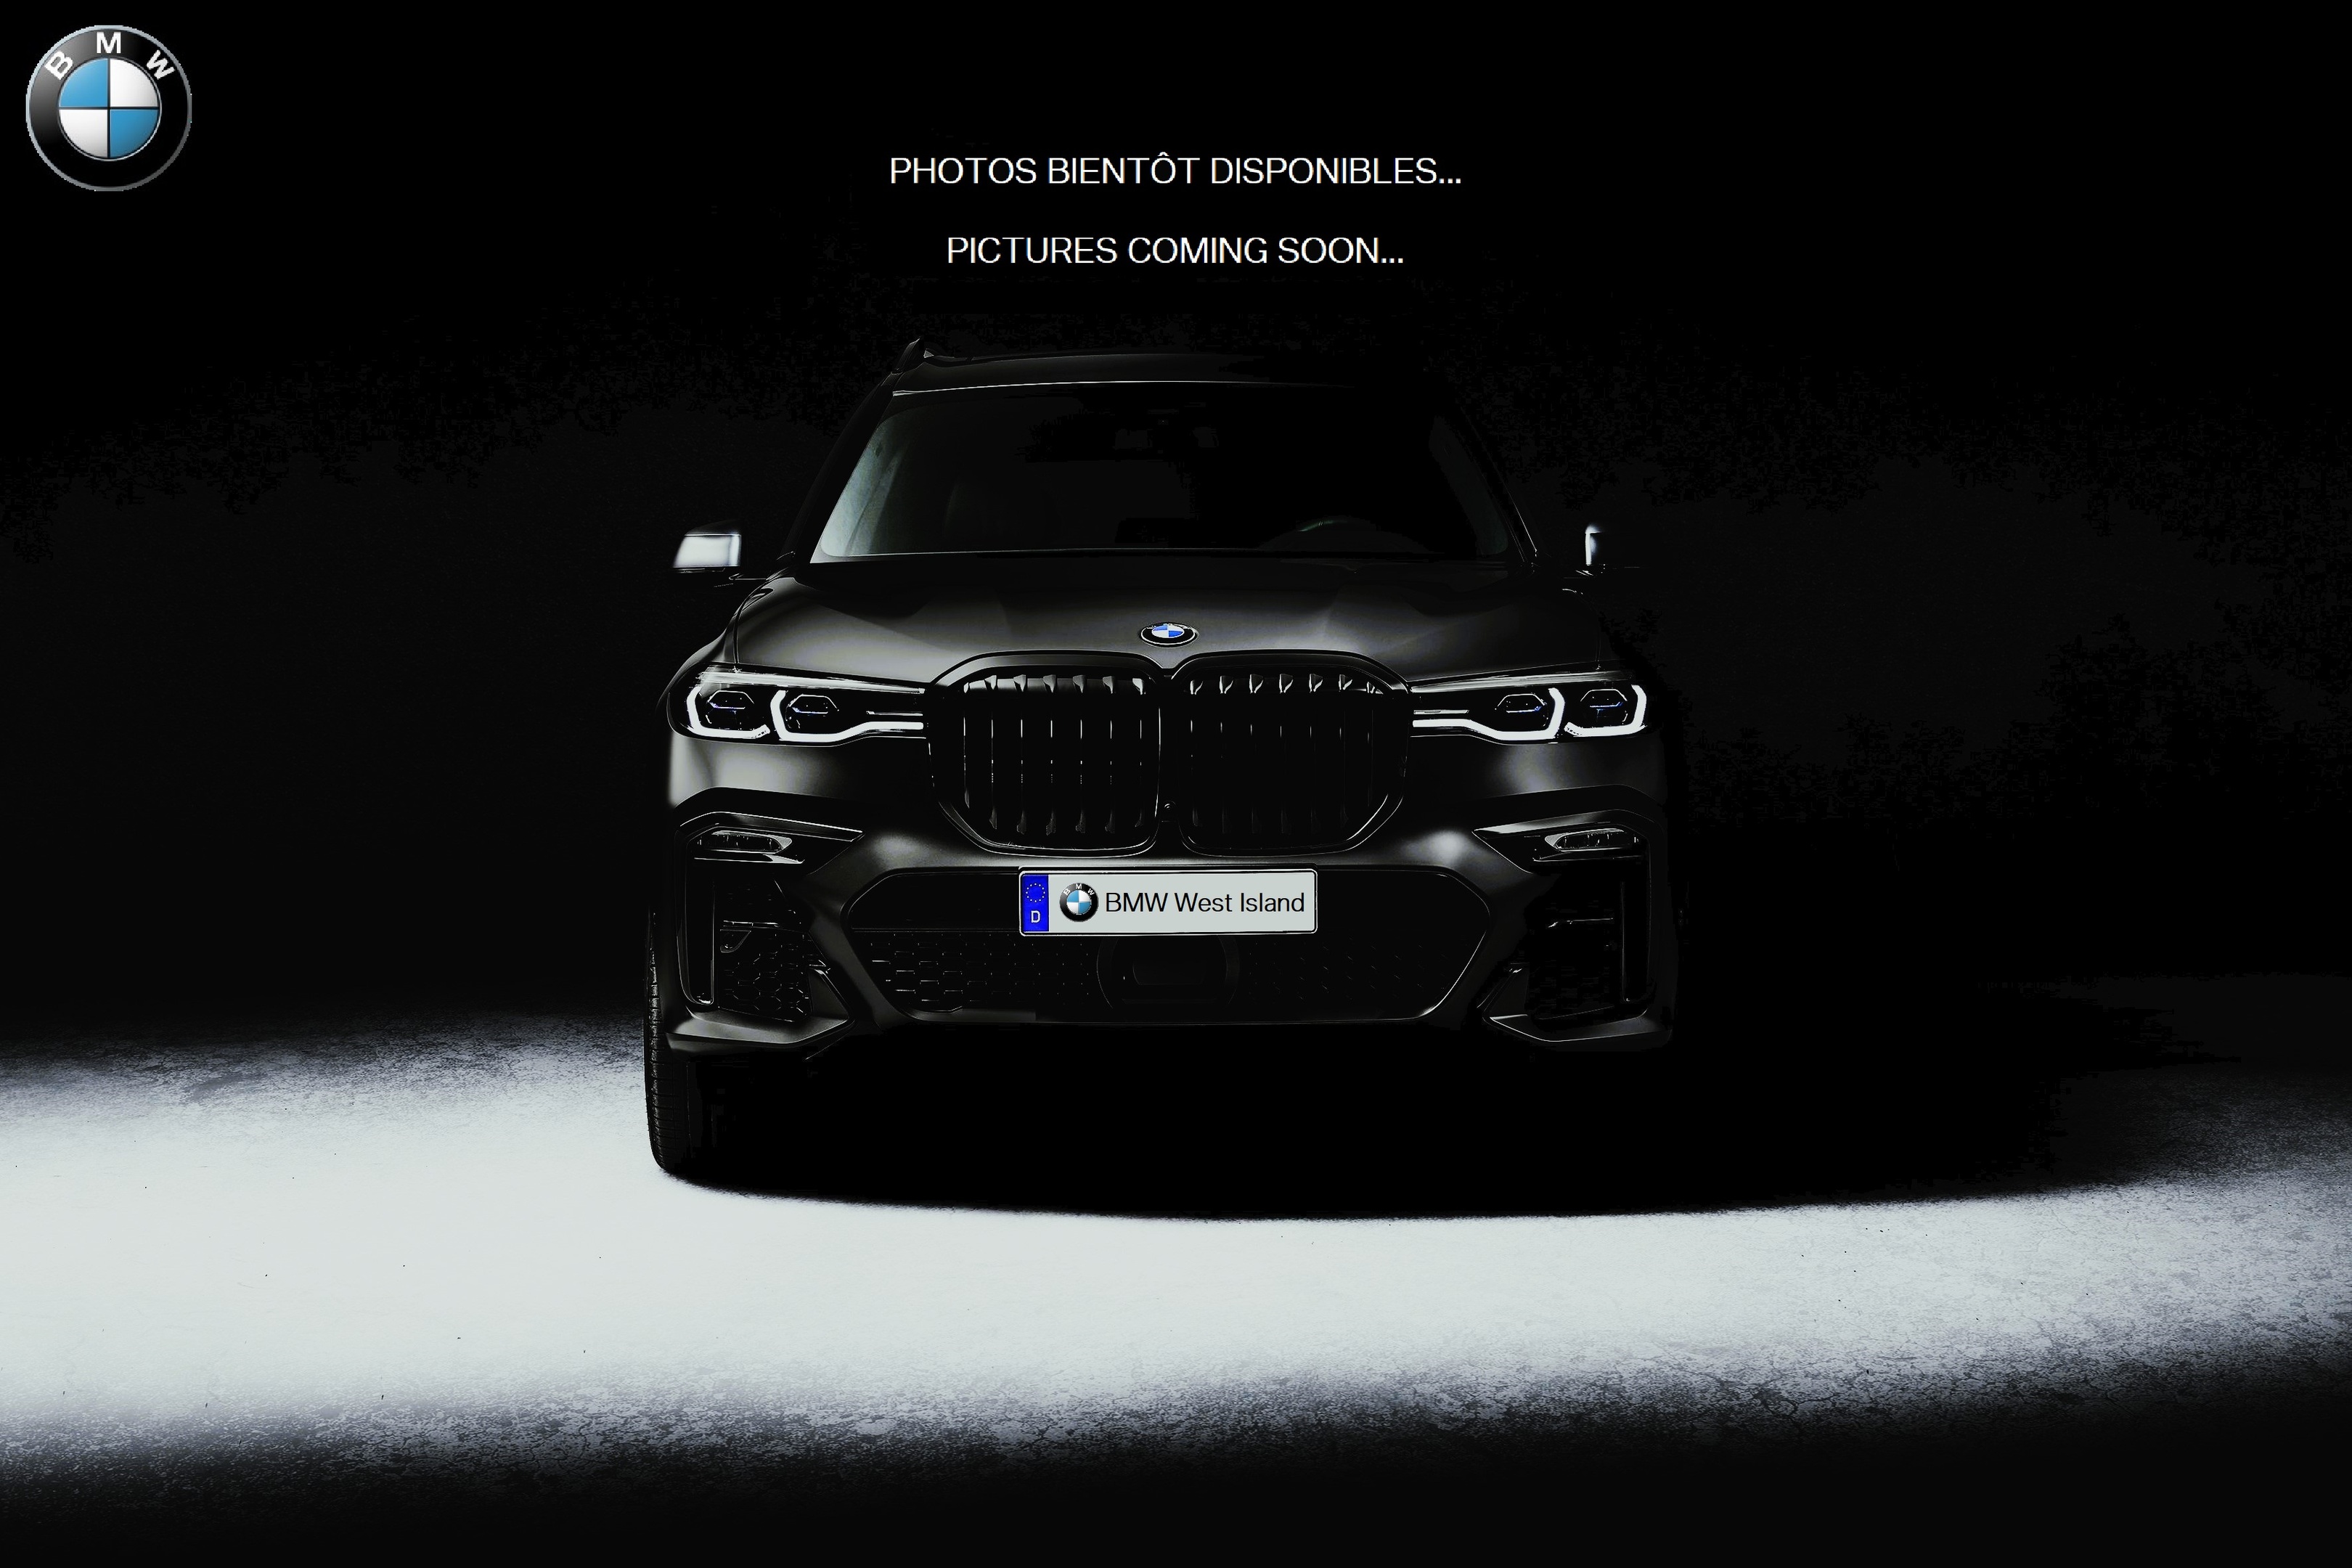 2020 BMW M340i xDrive M340i xDrive - Série Certifié - Premium Enhanced